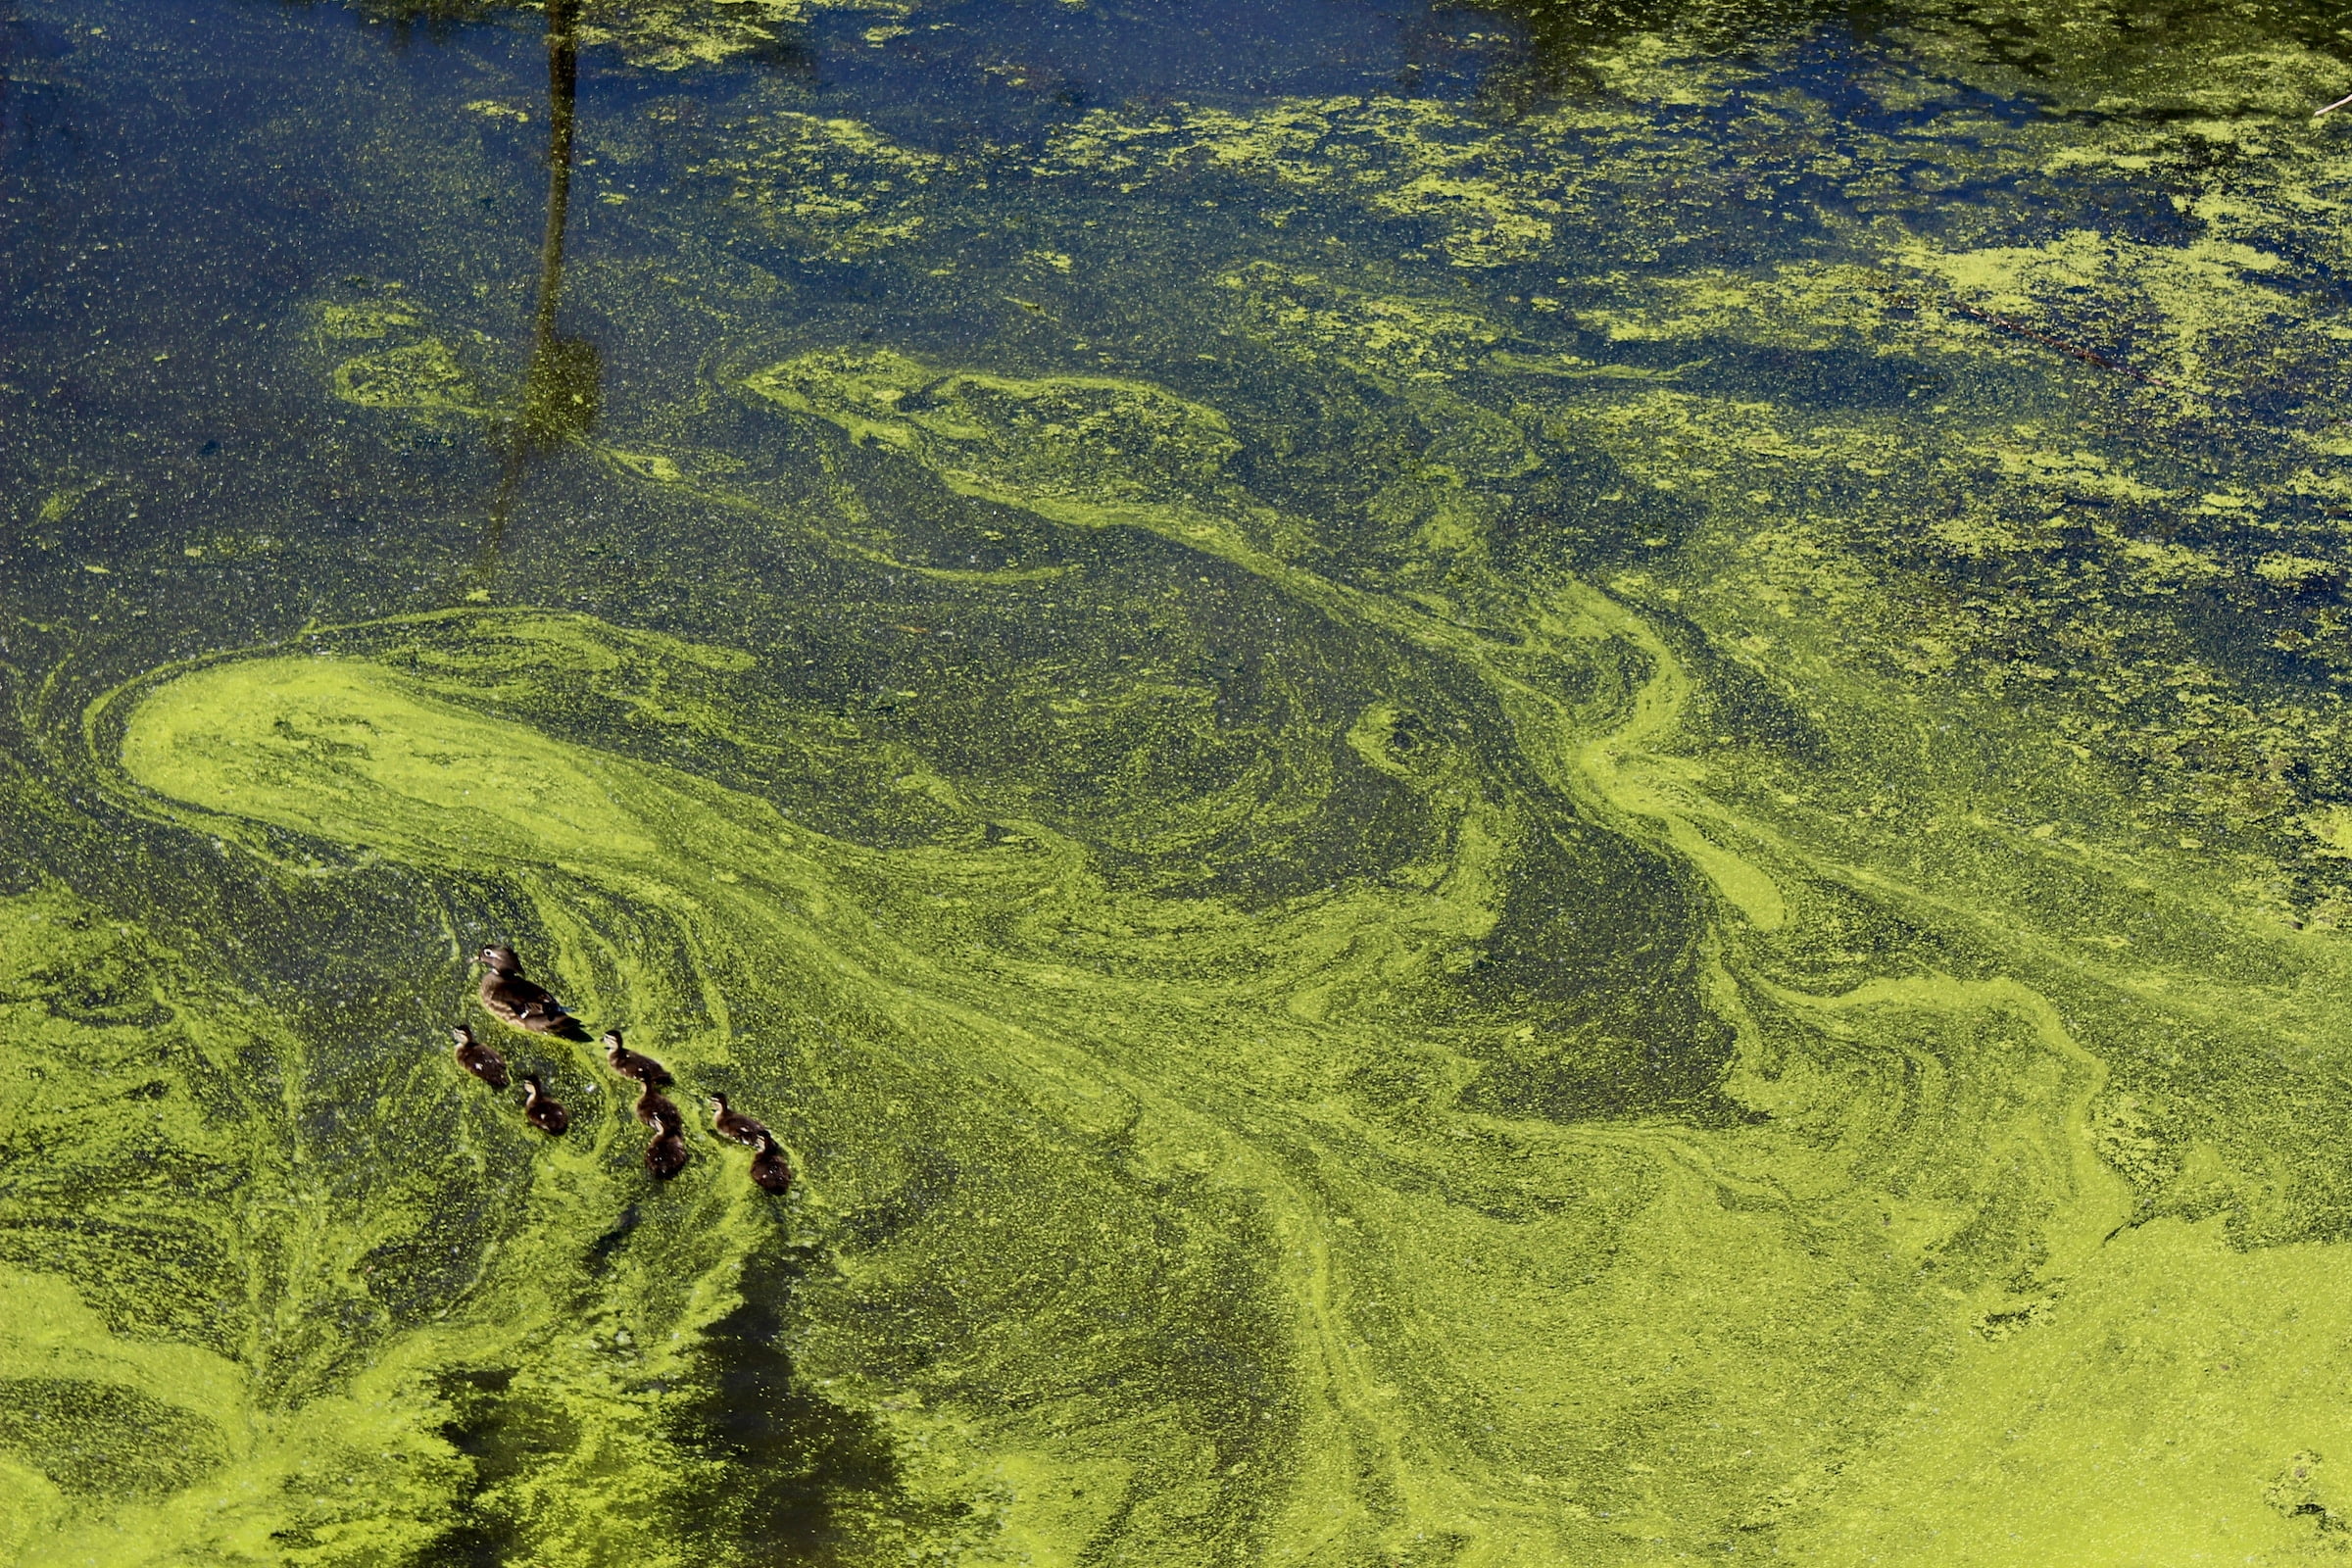 the innovative pursuit of algae-based biofuels is gaining momentum.